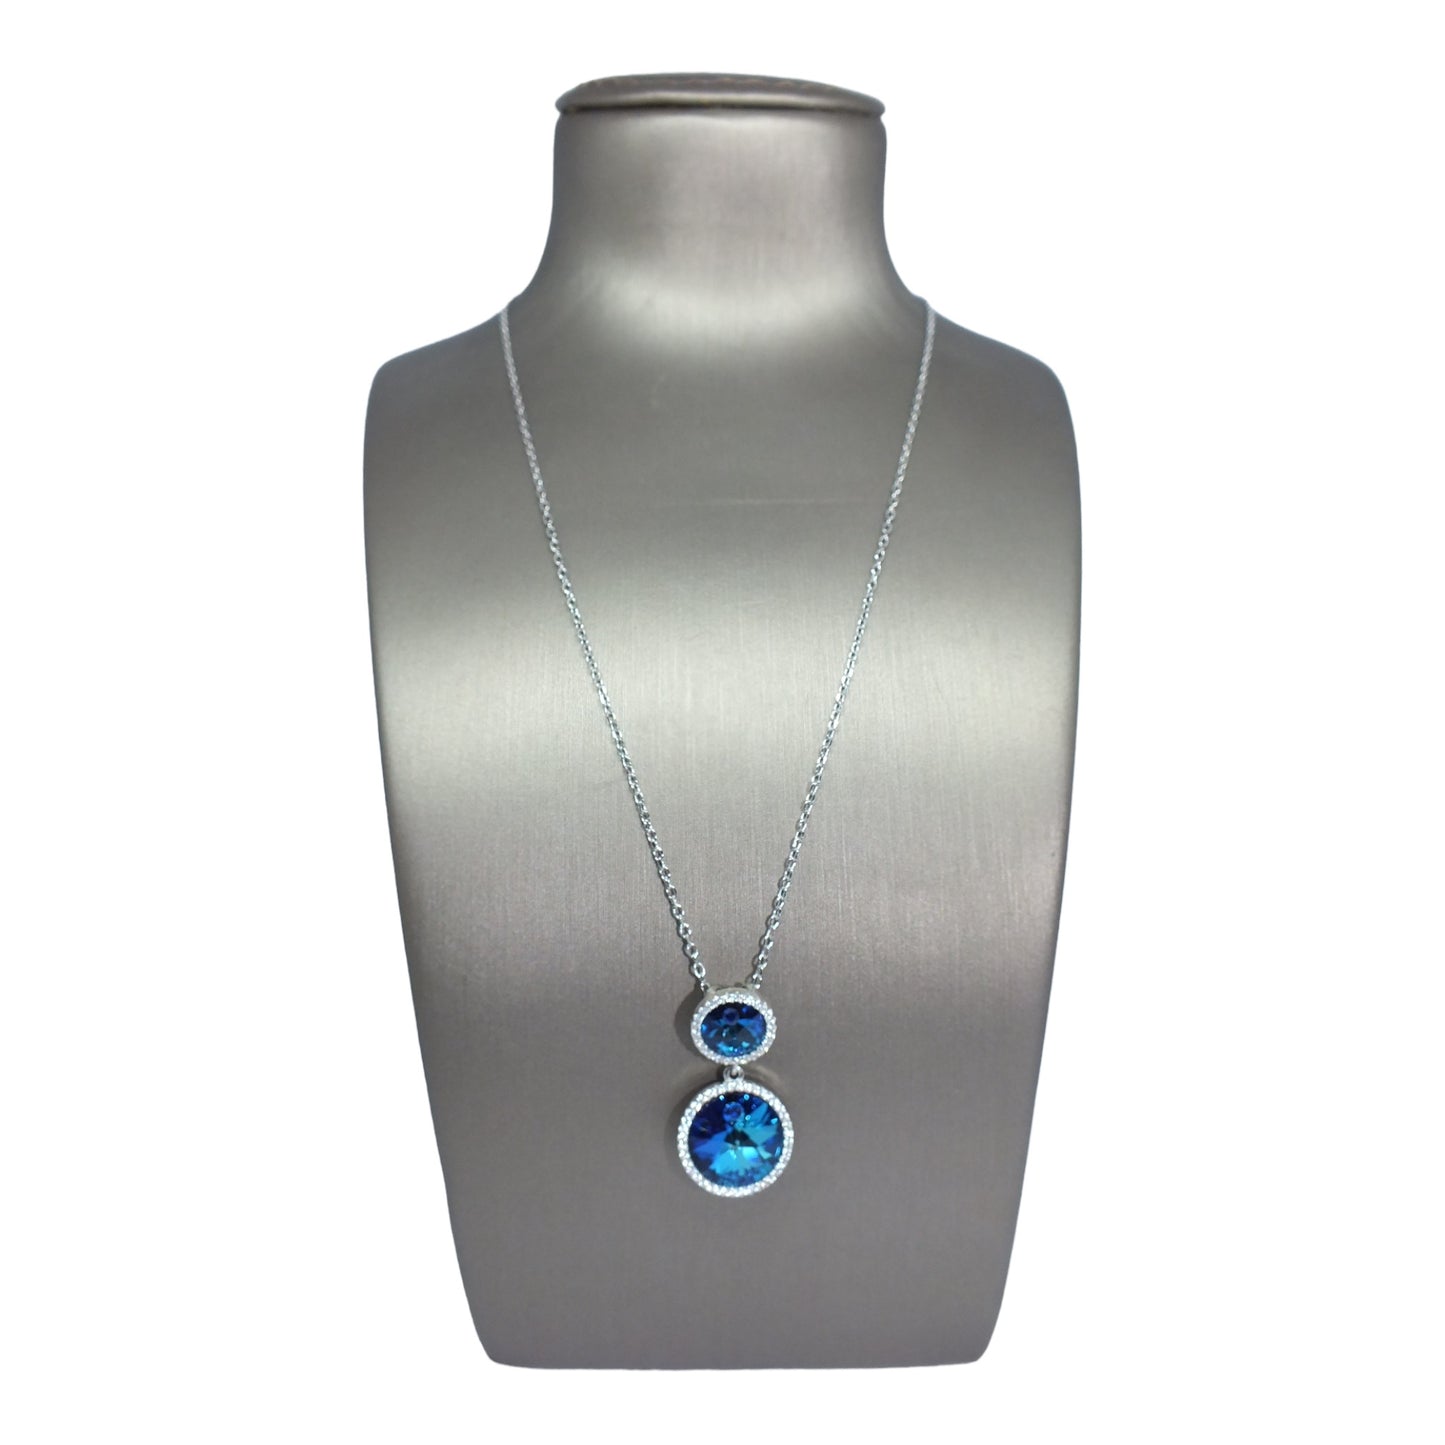 Blue Stone Silver Necklace- سلسال فضة حجر ازرق